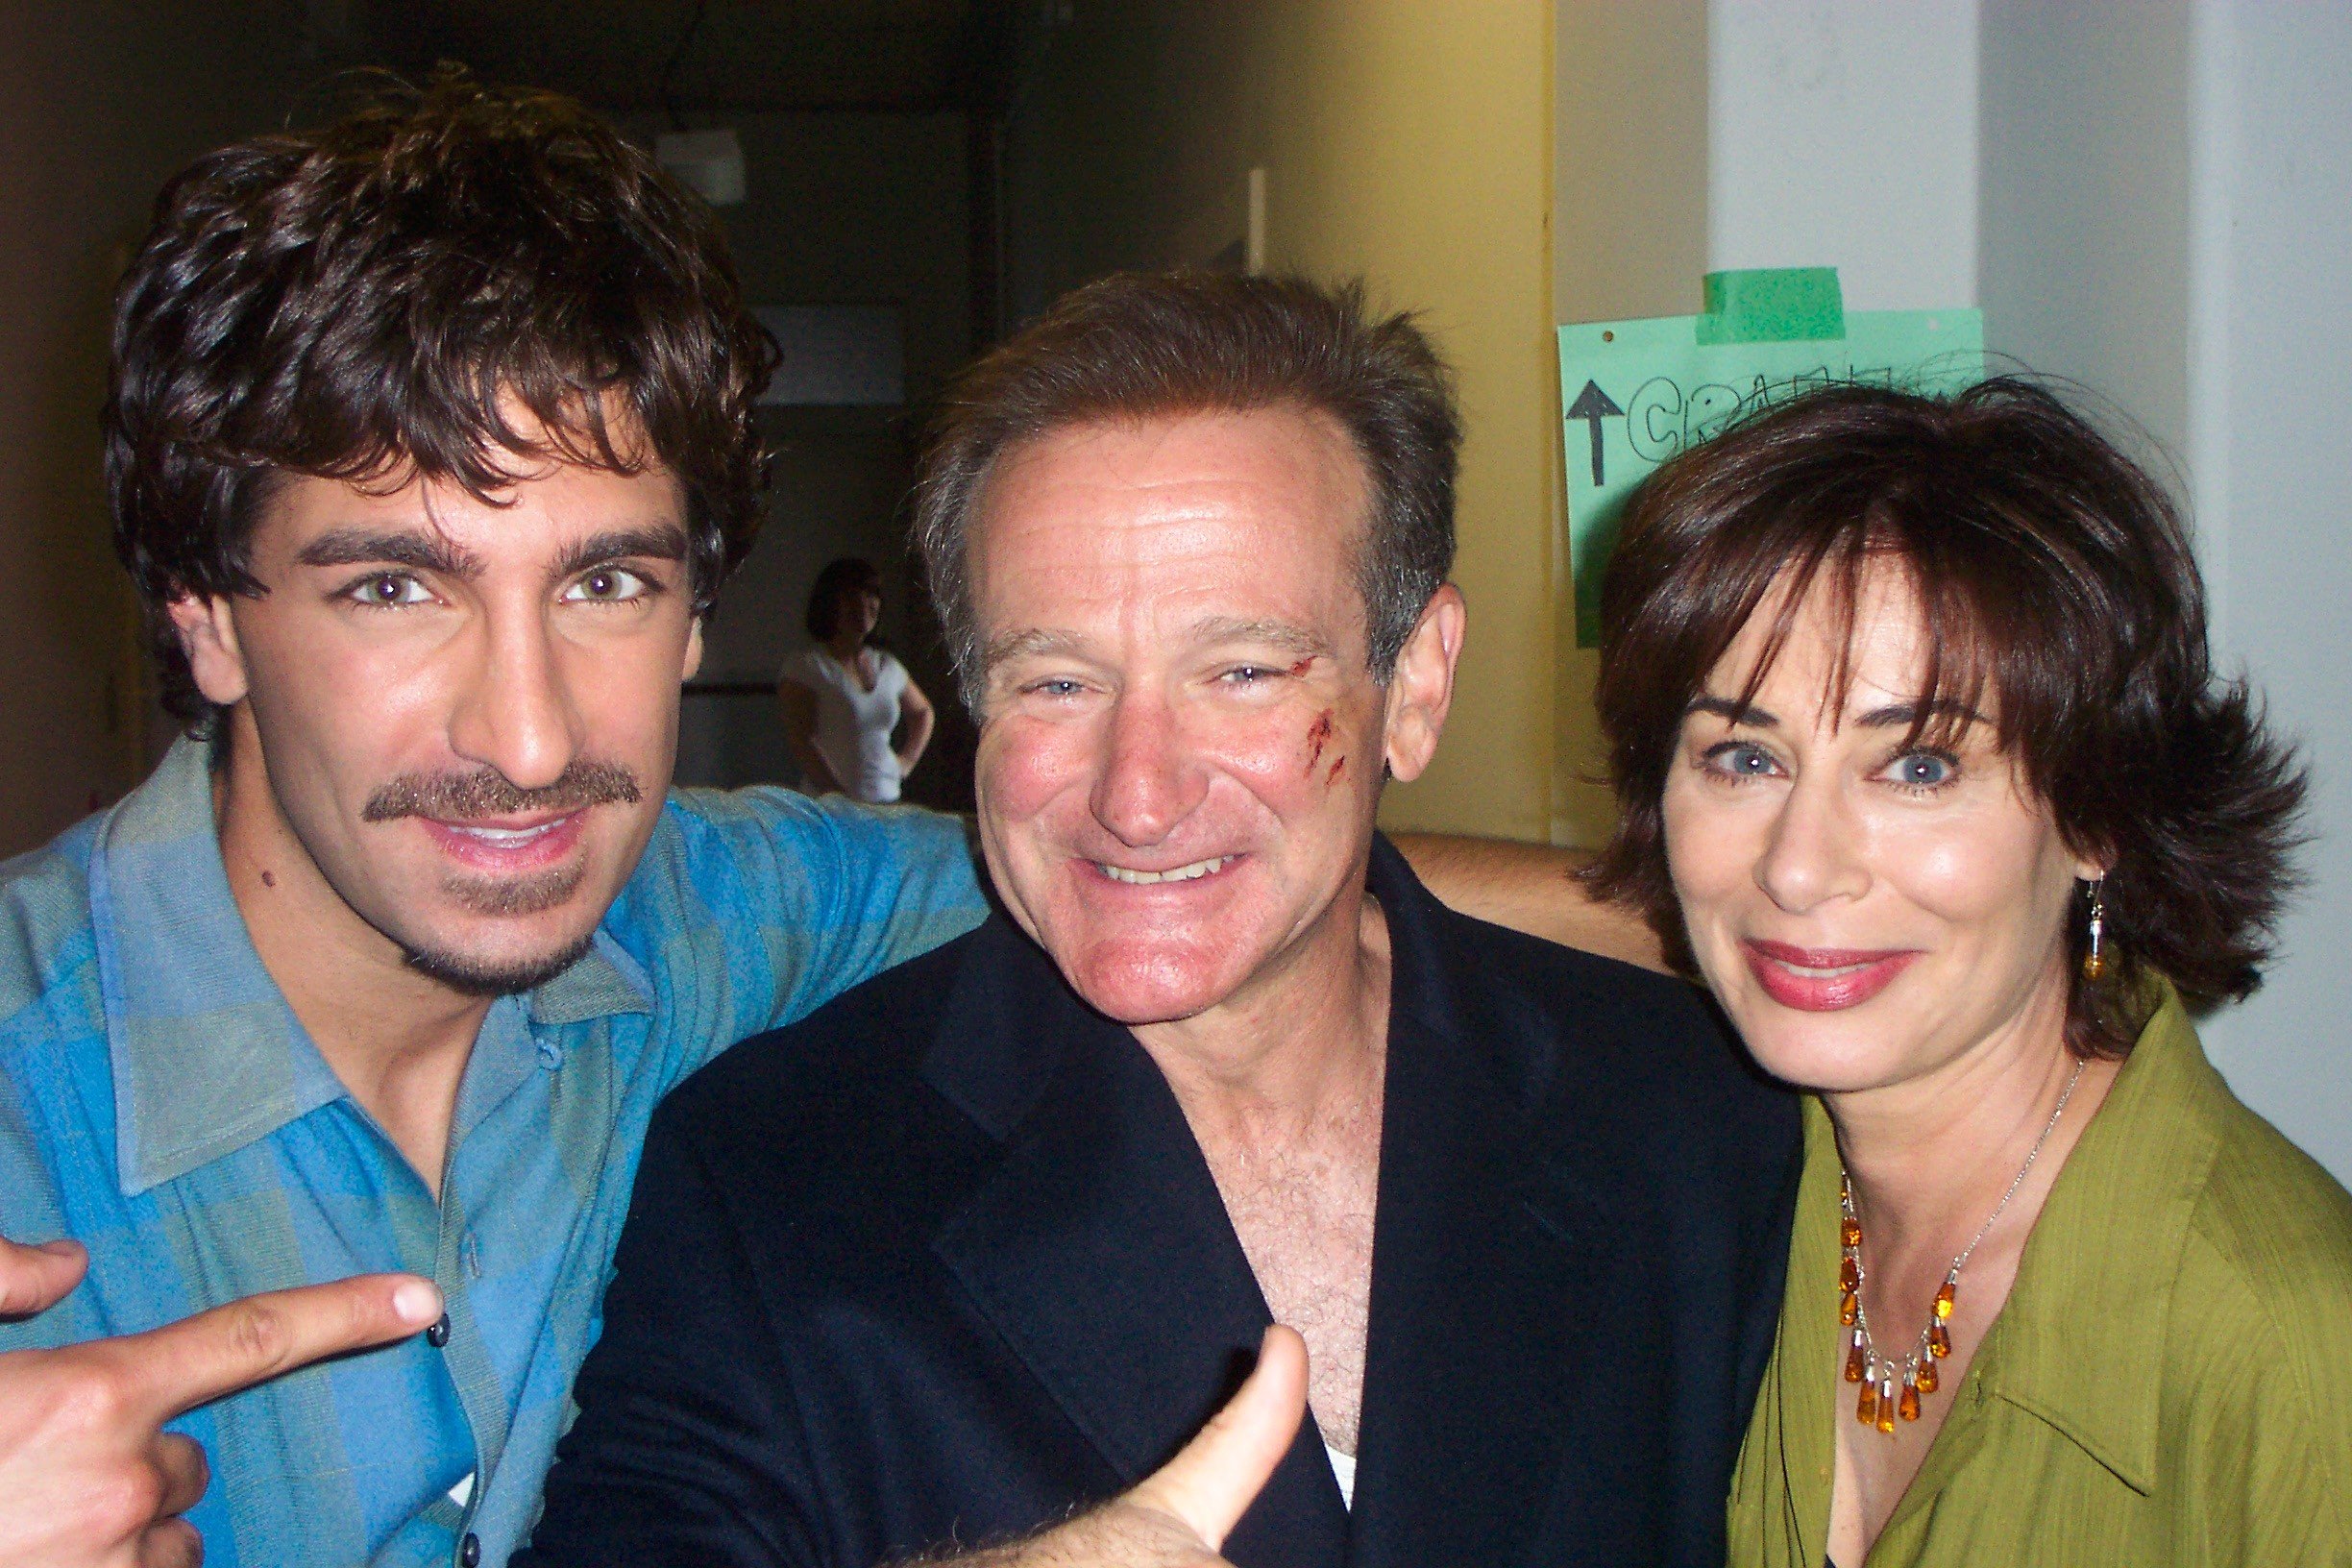 The Final Cut Thom Bishops, Robin Williams, and Mimi Kuzyck